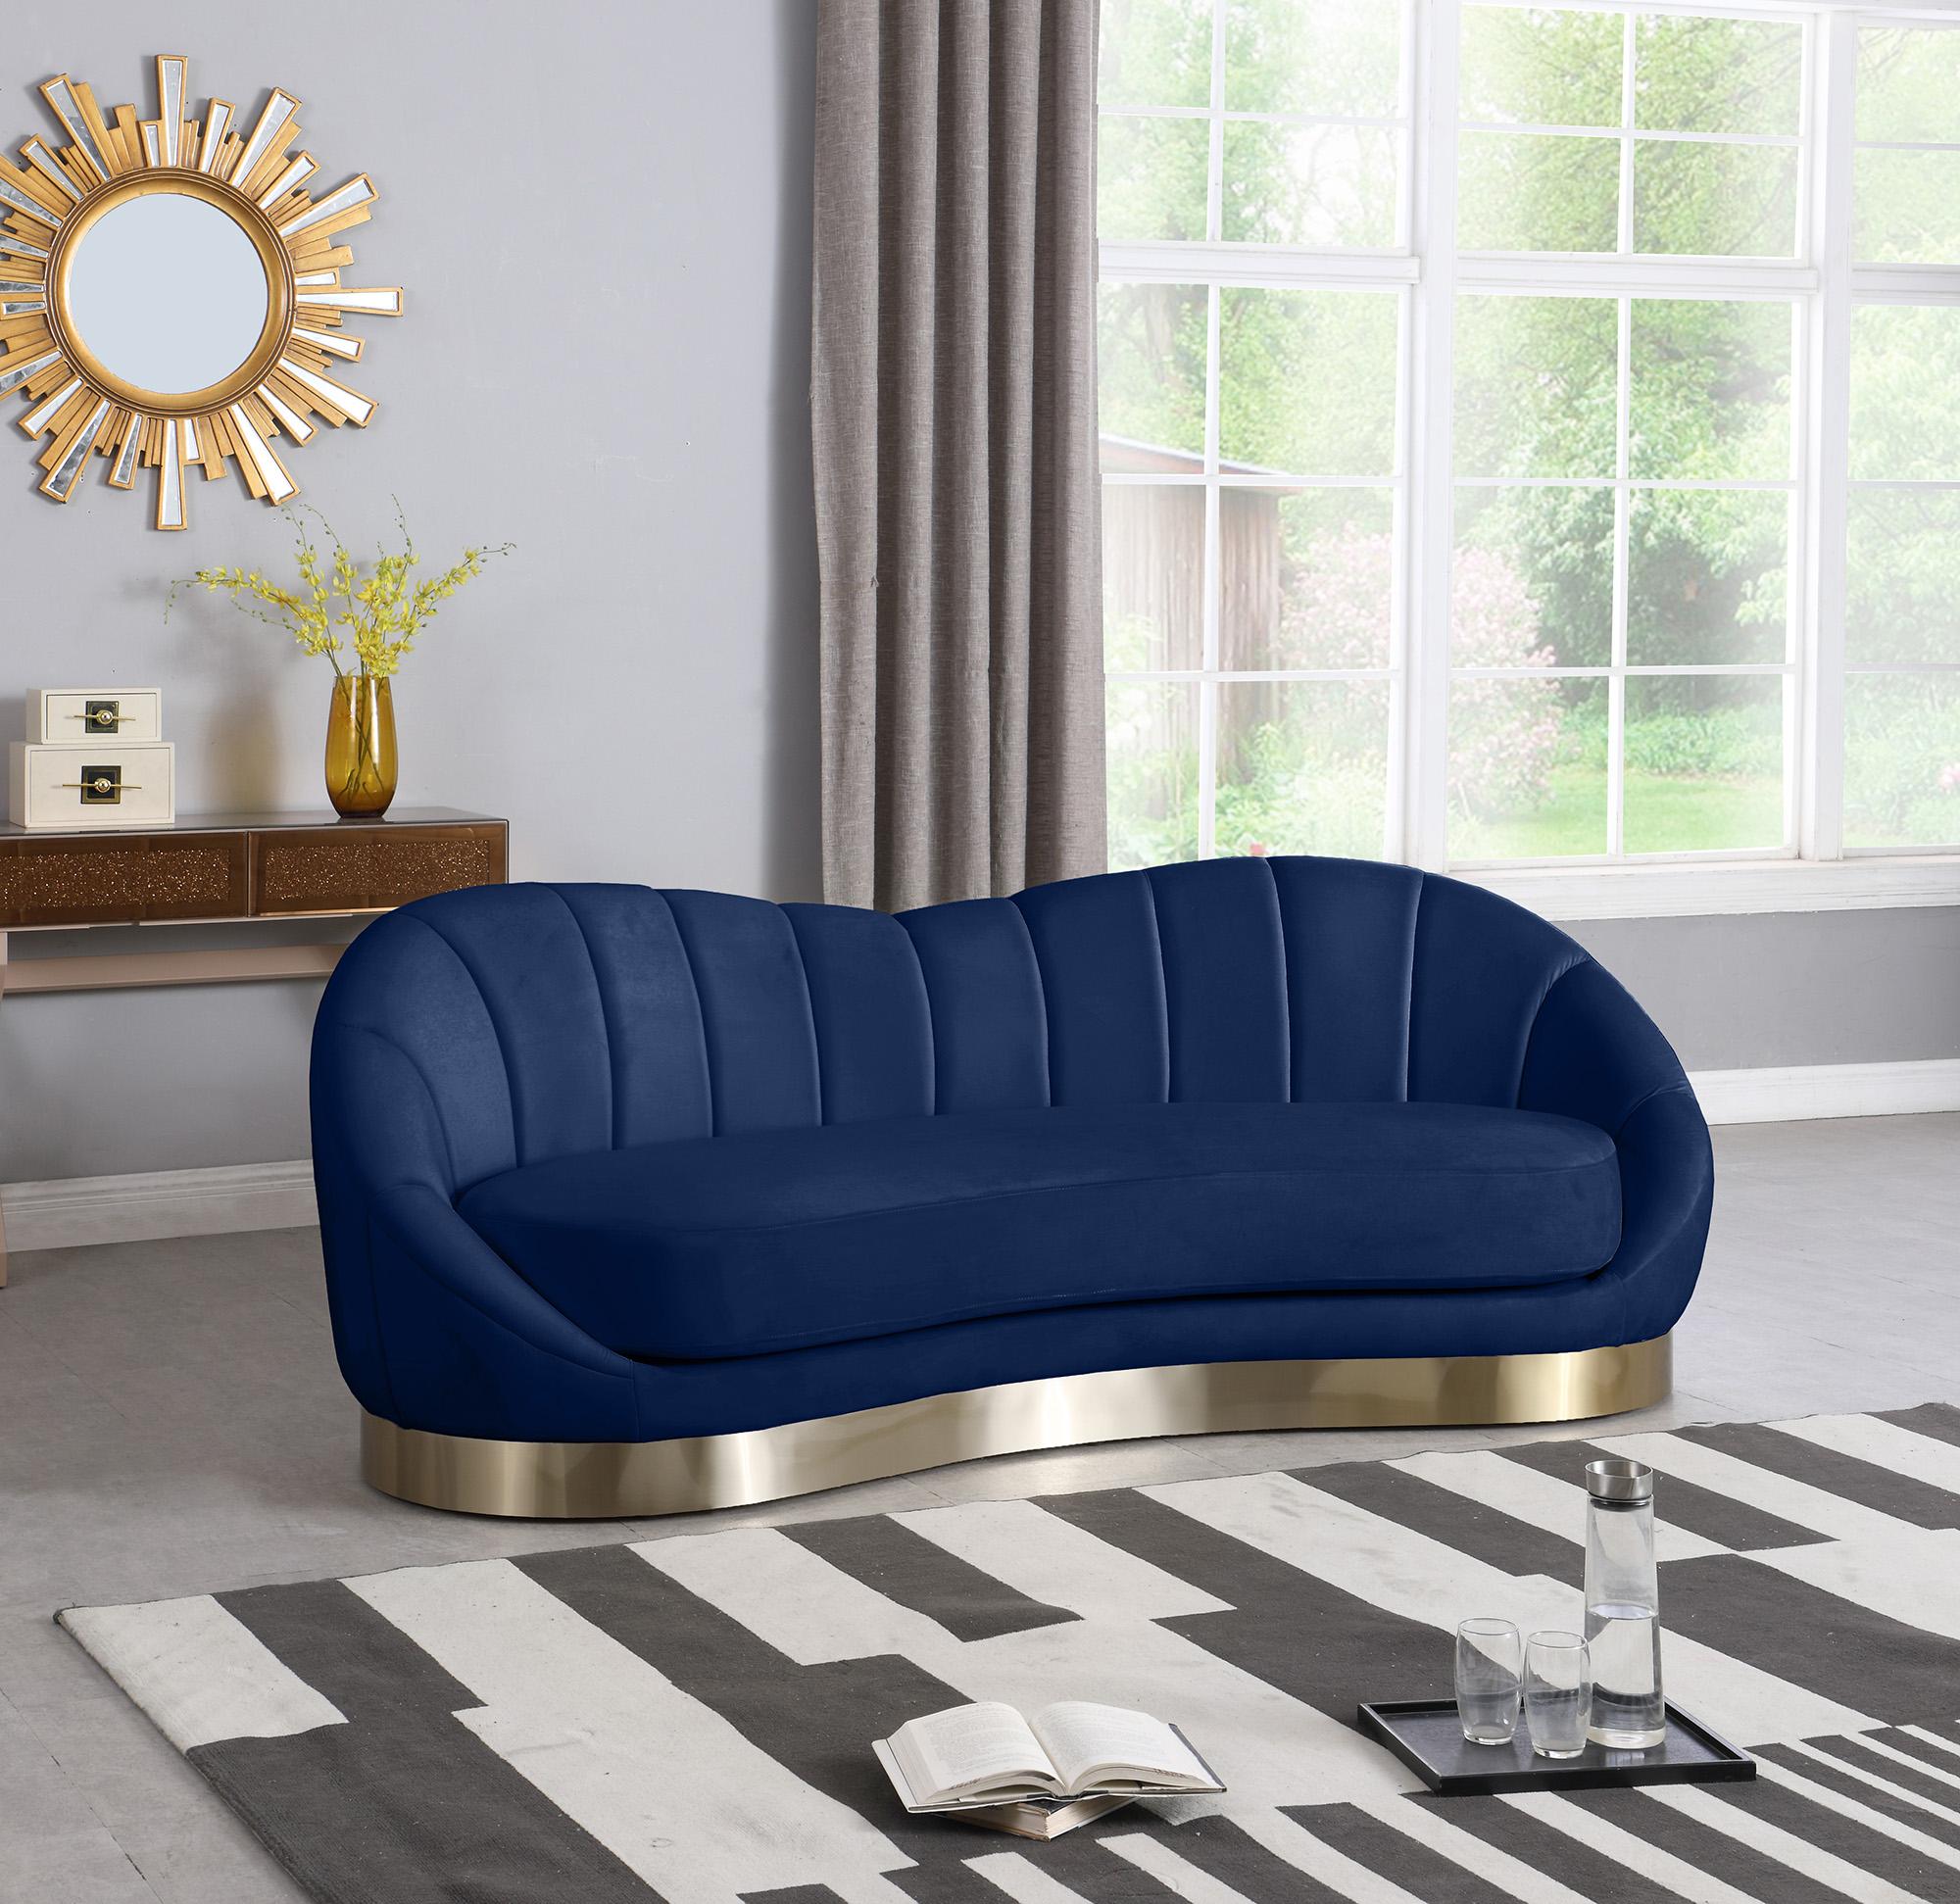 

    
623Navy-S Meridian Furniture Sofa
